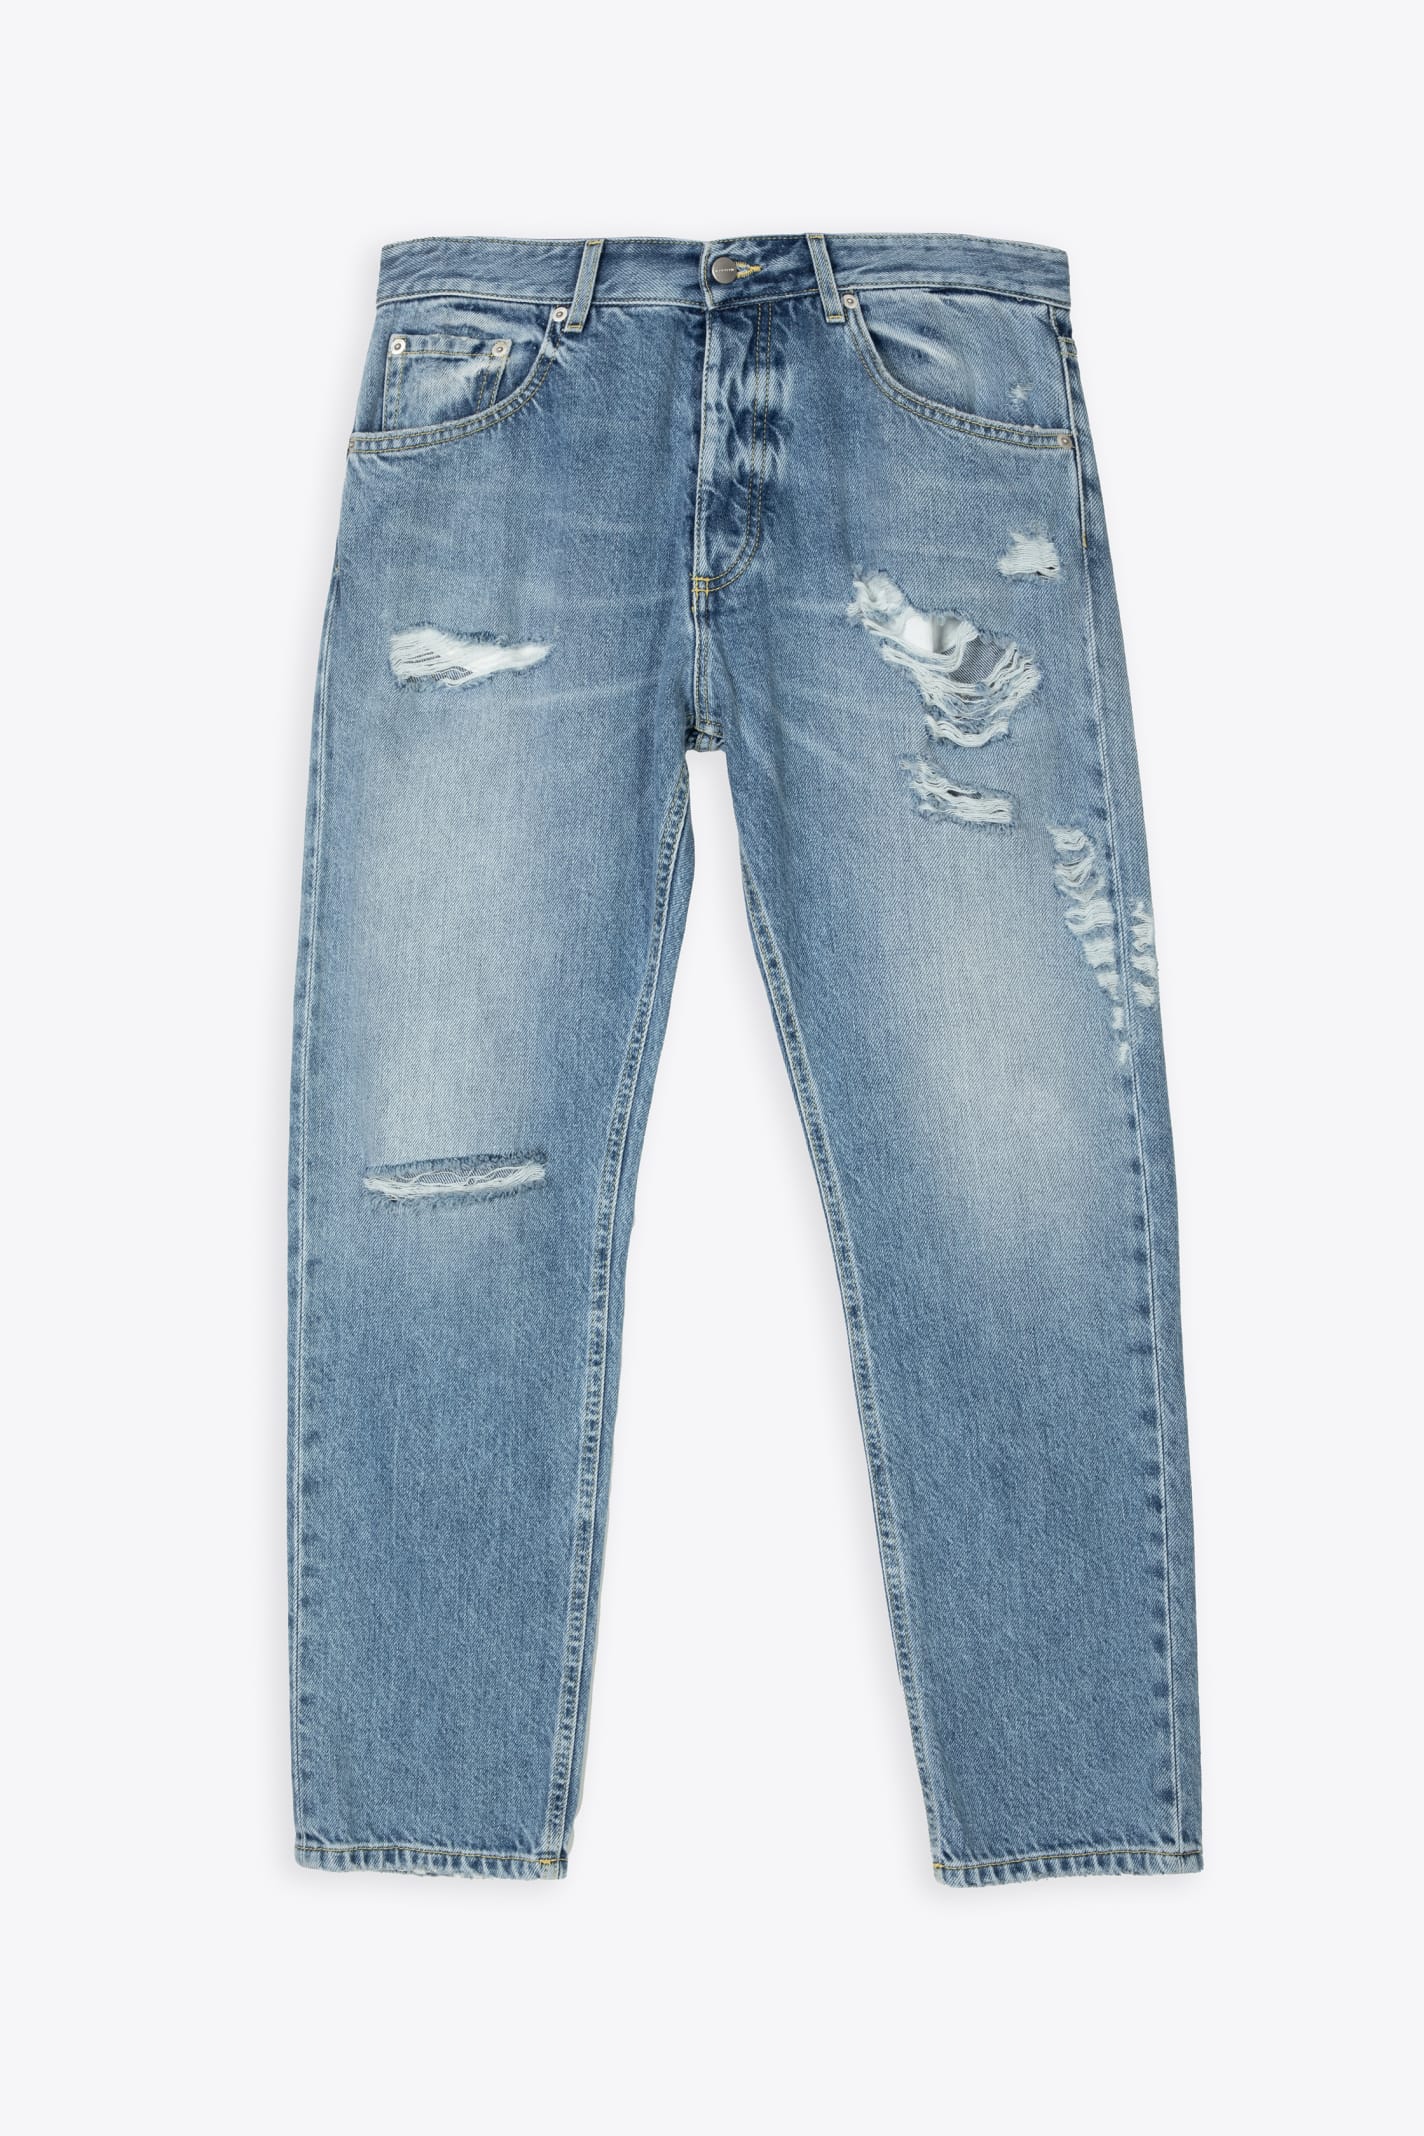 Icon Denim Jeans Light blue distressed jeans regular fit